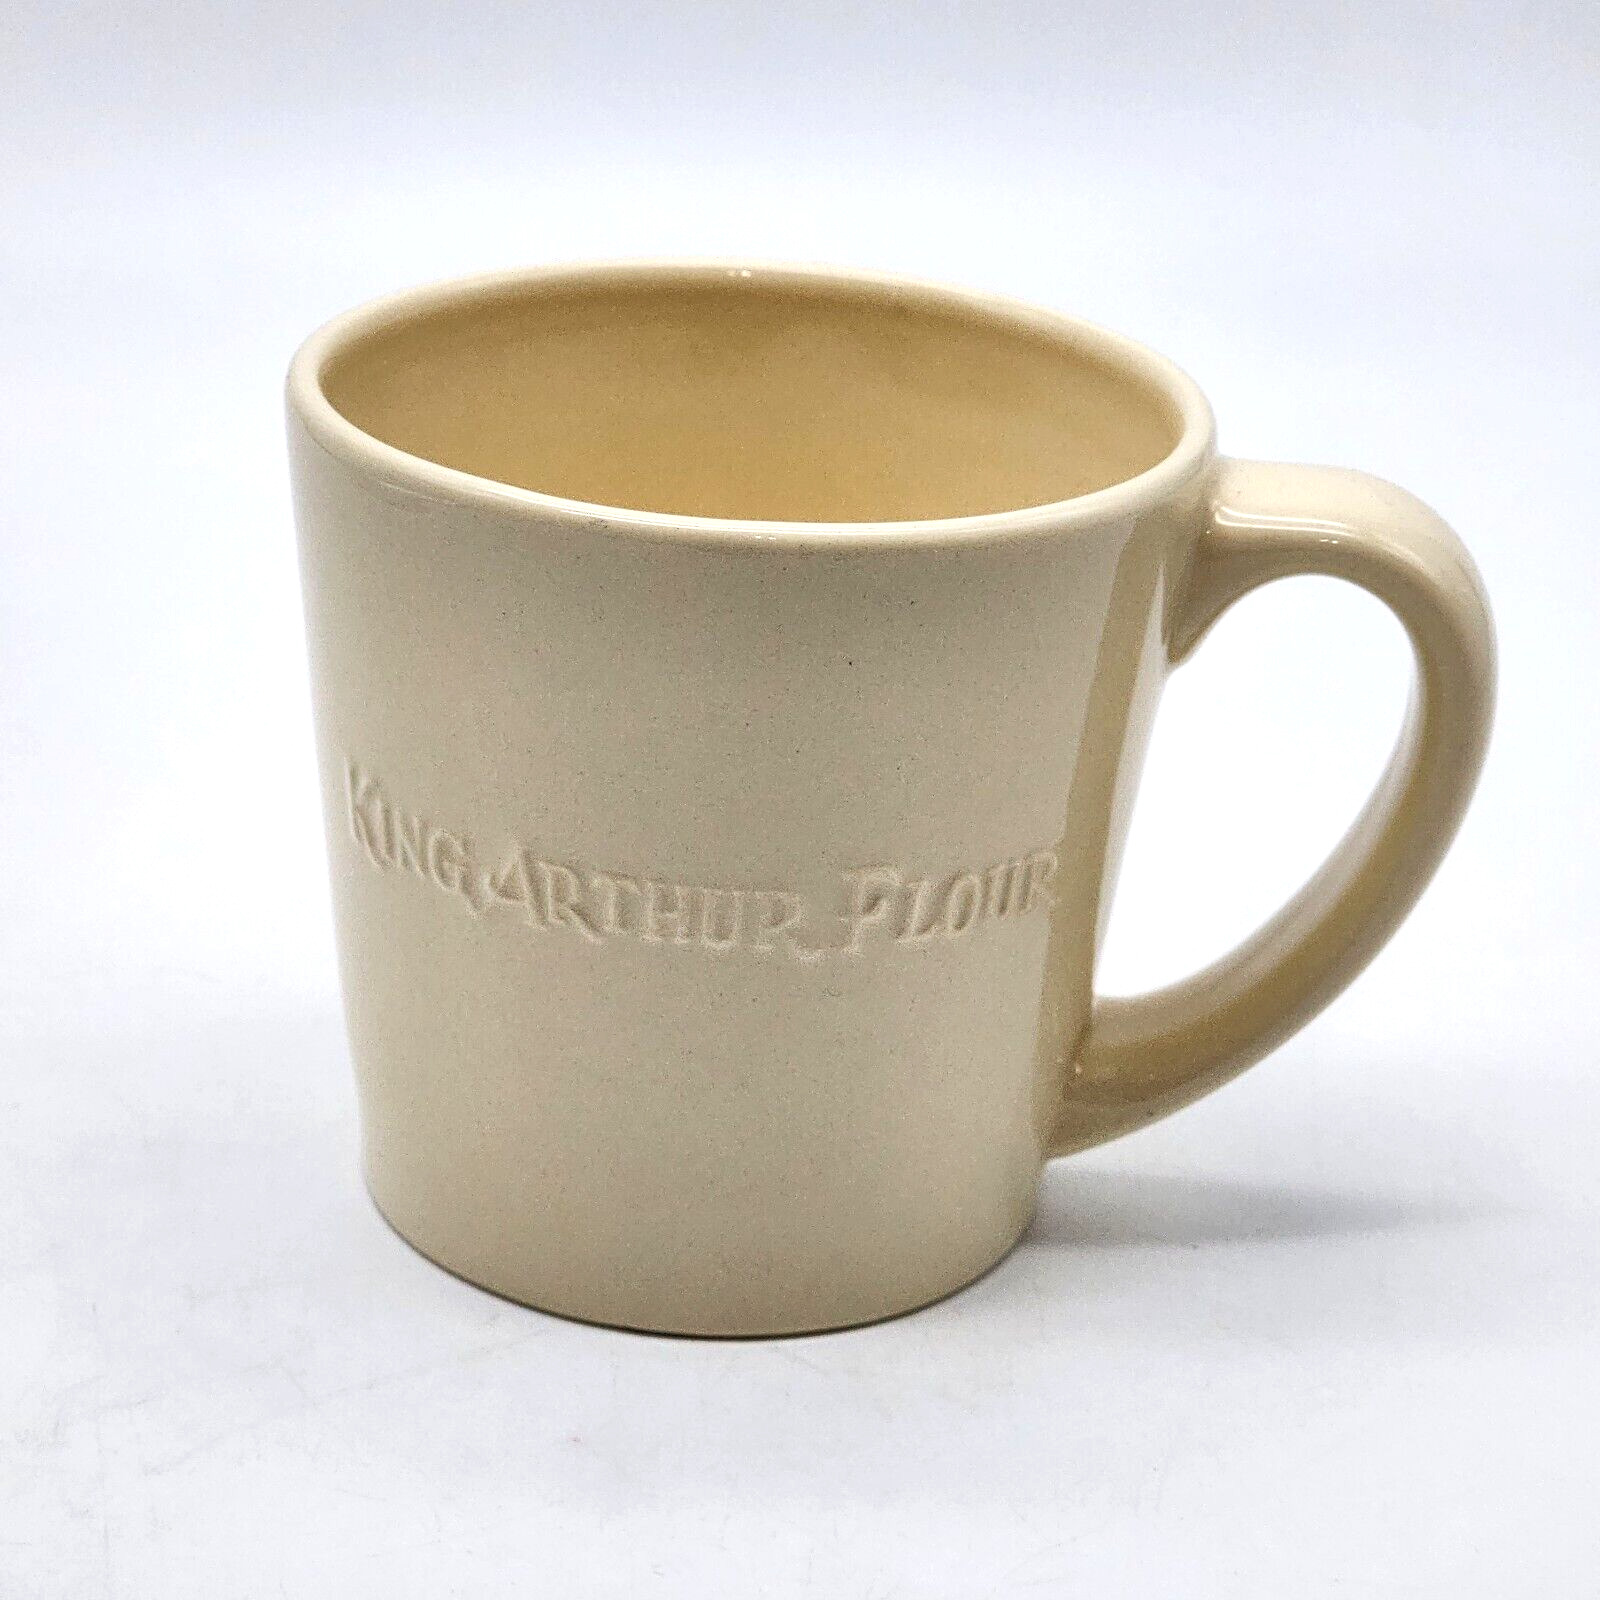 King Arthur Flour Coffee Mug Tea Cup Ceramic Chantal 12 oz. Cream Embossed Print